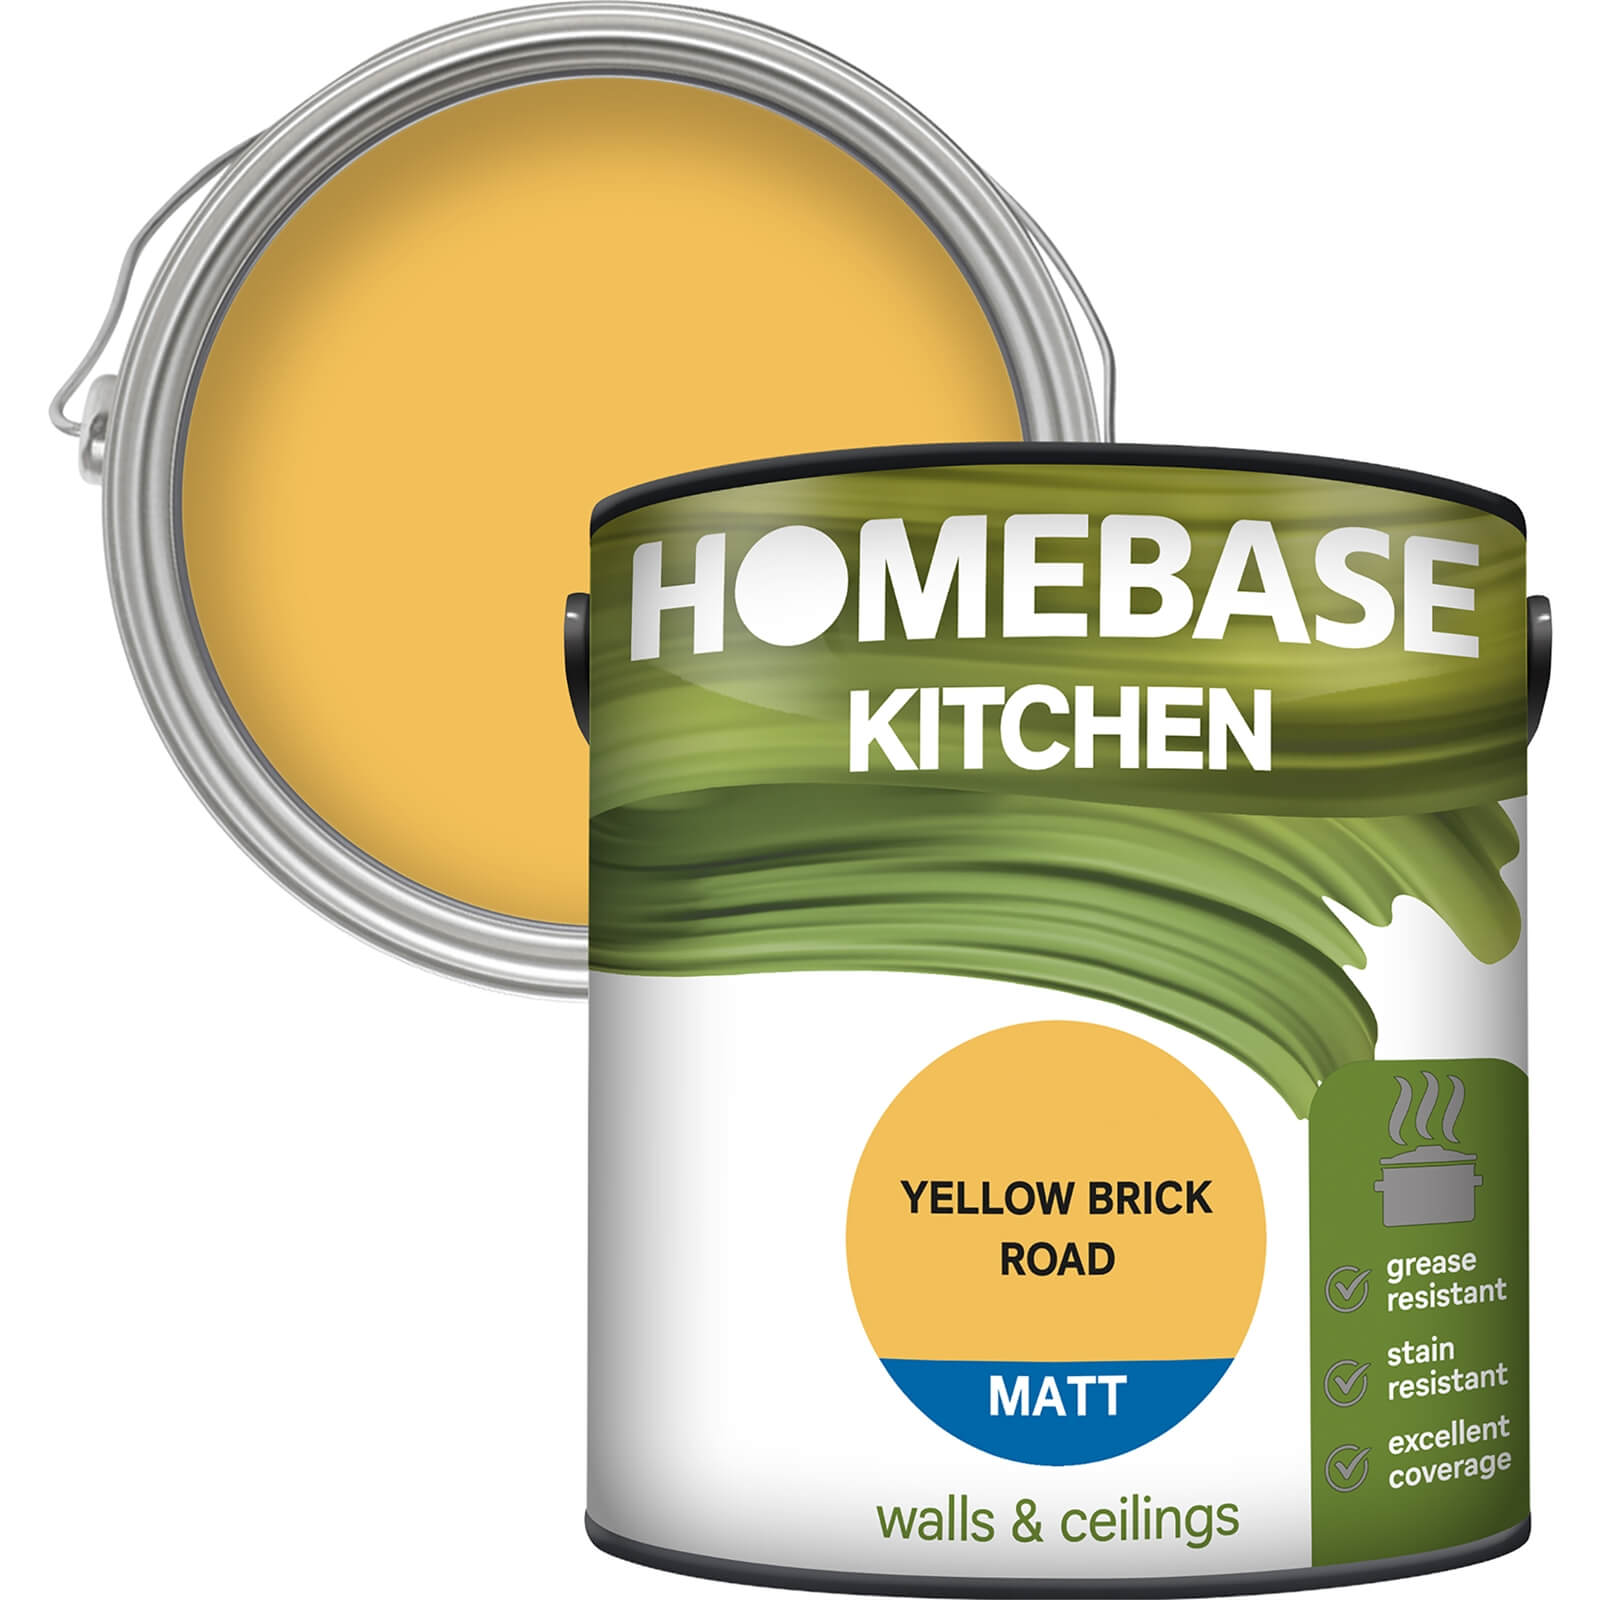 Photo of Homebase Kitchen Matt Paint - Yellow Brick Road 2.5l